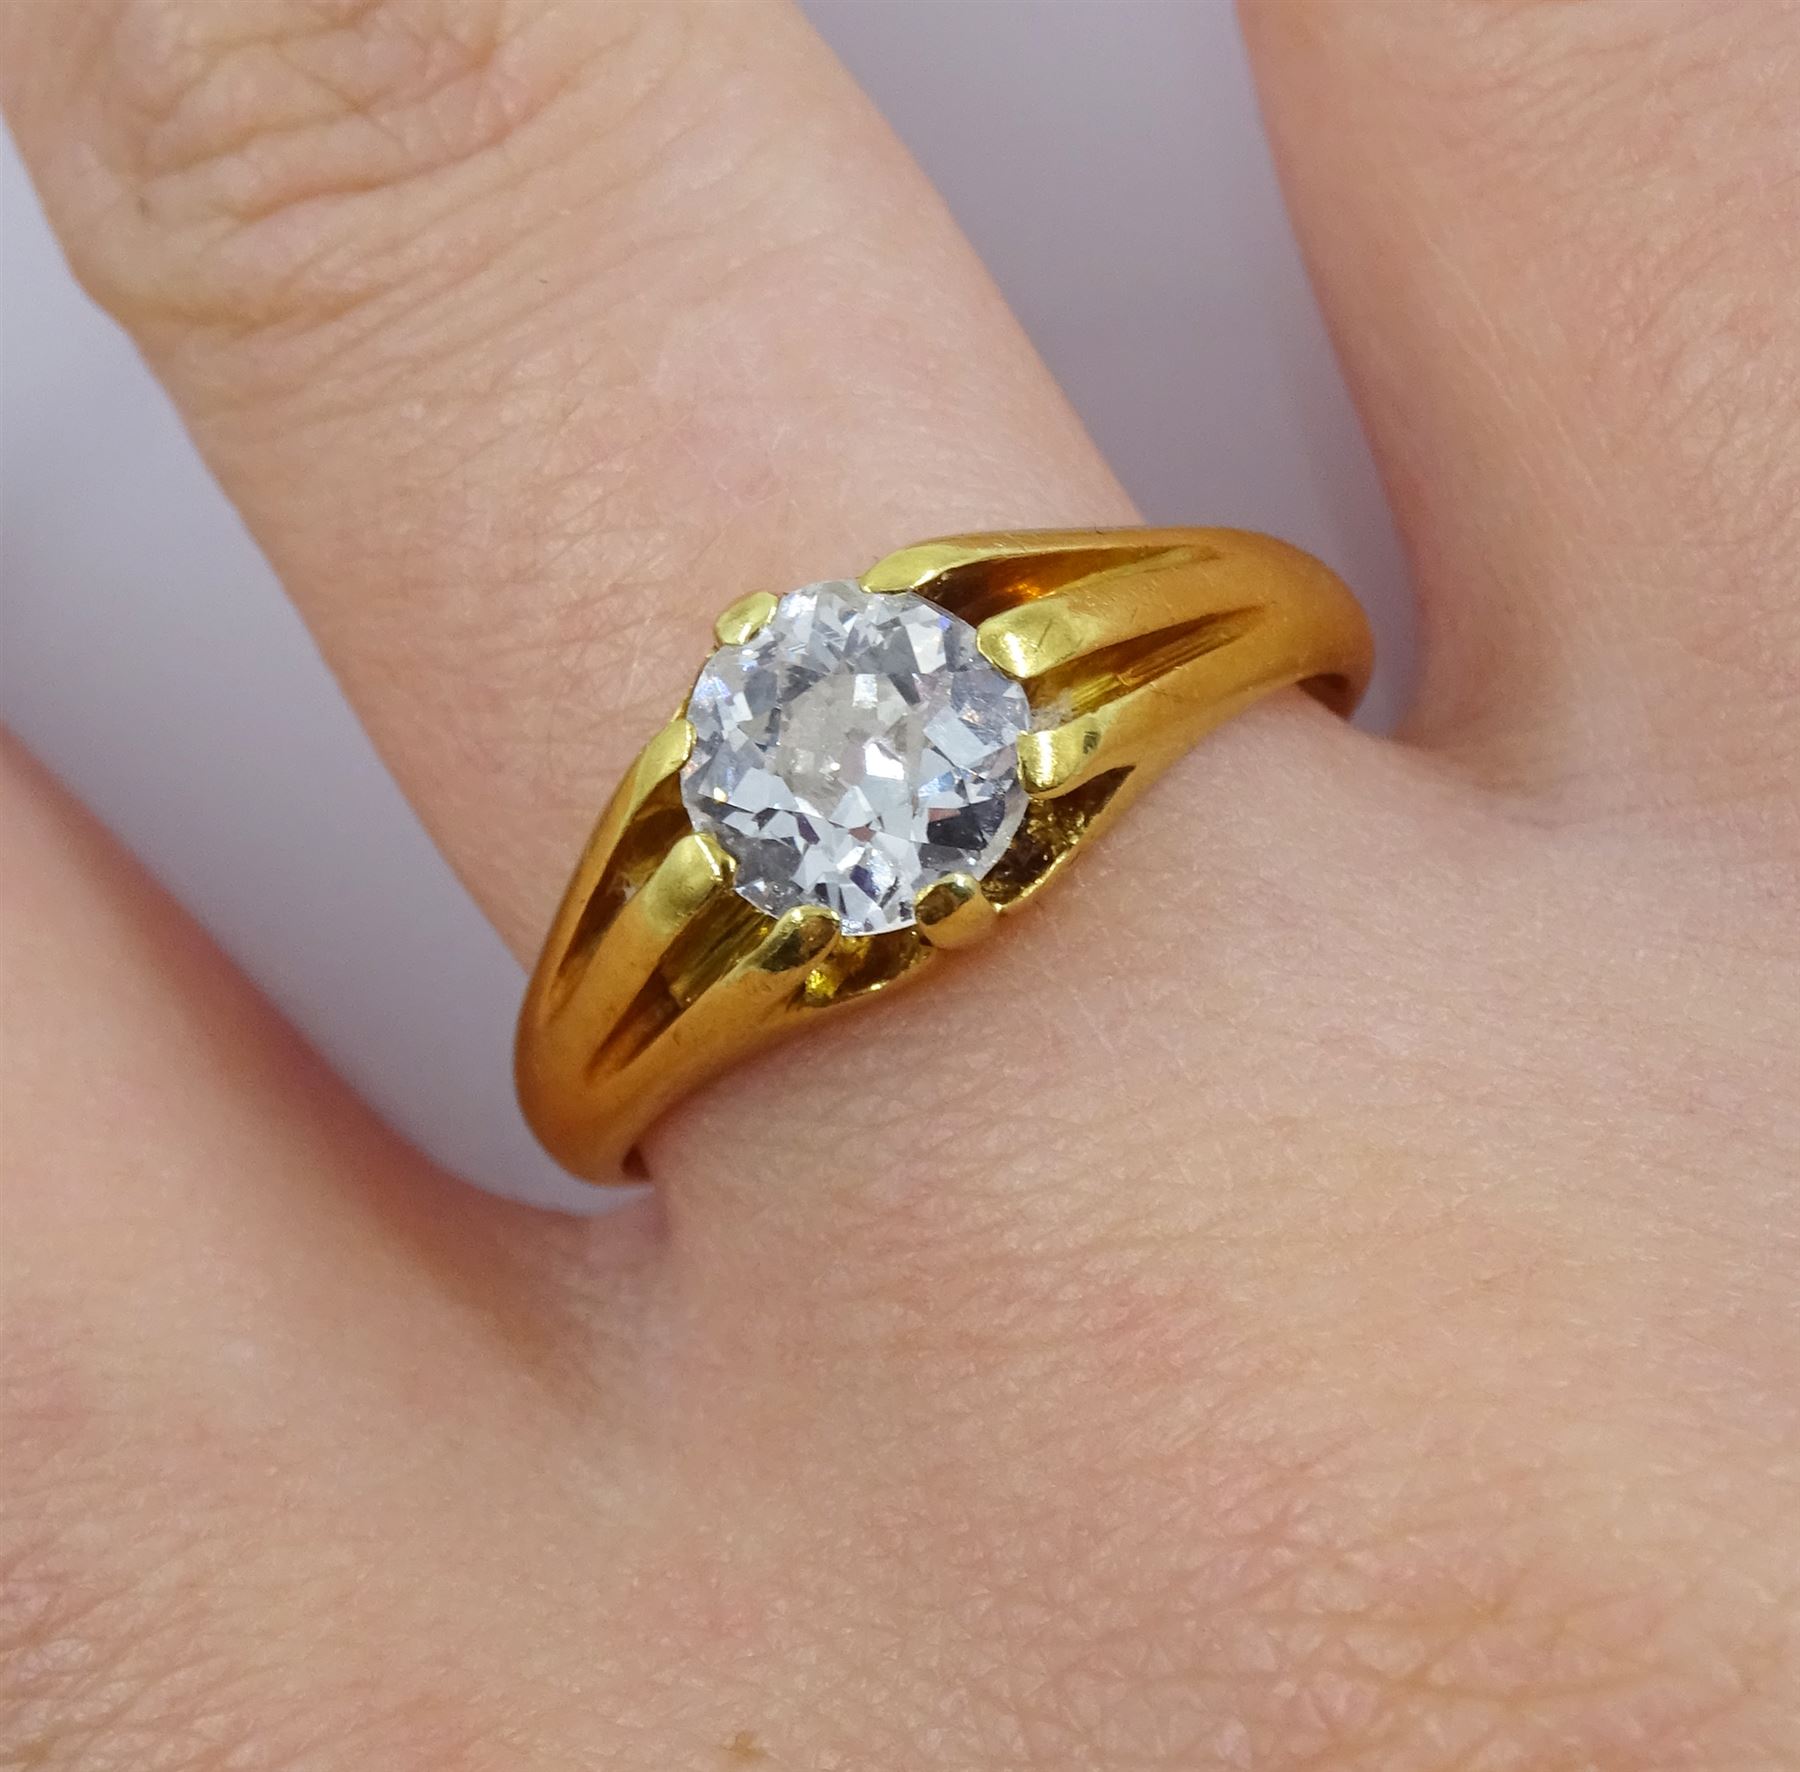 Early 20th century gold single stone diamond ring - Image 2 of 5